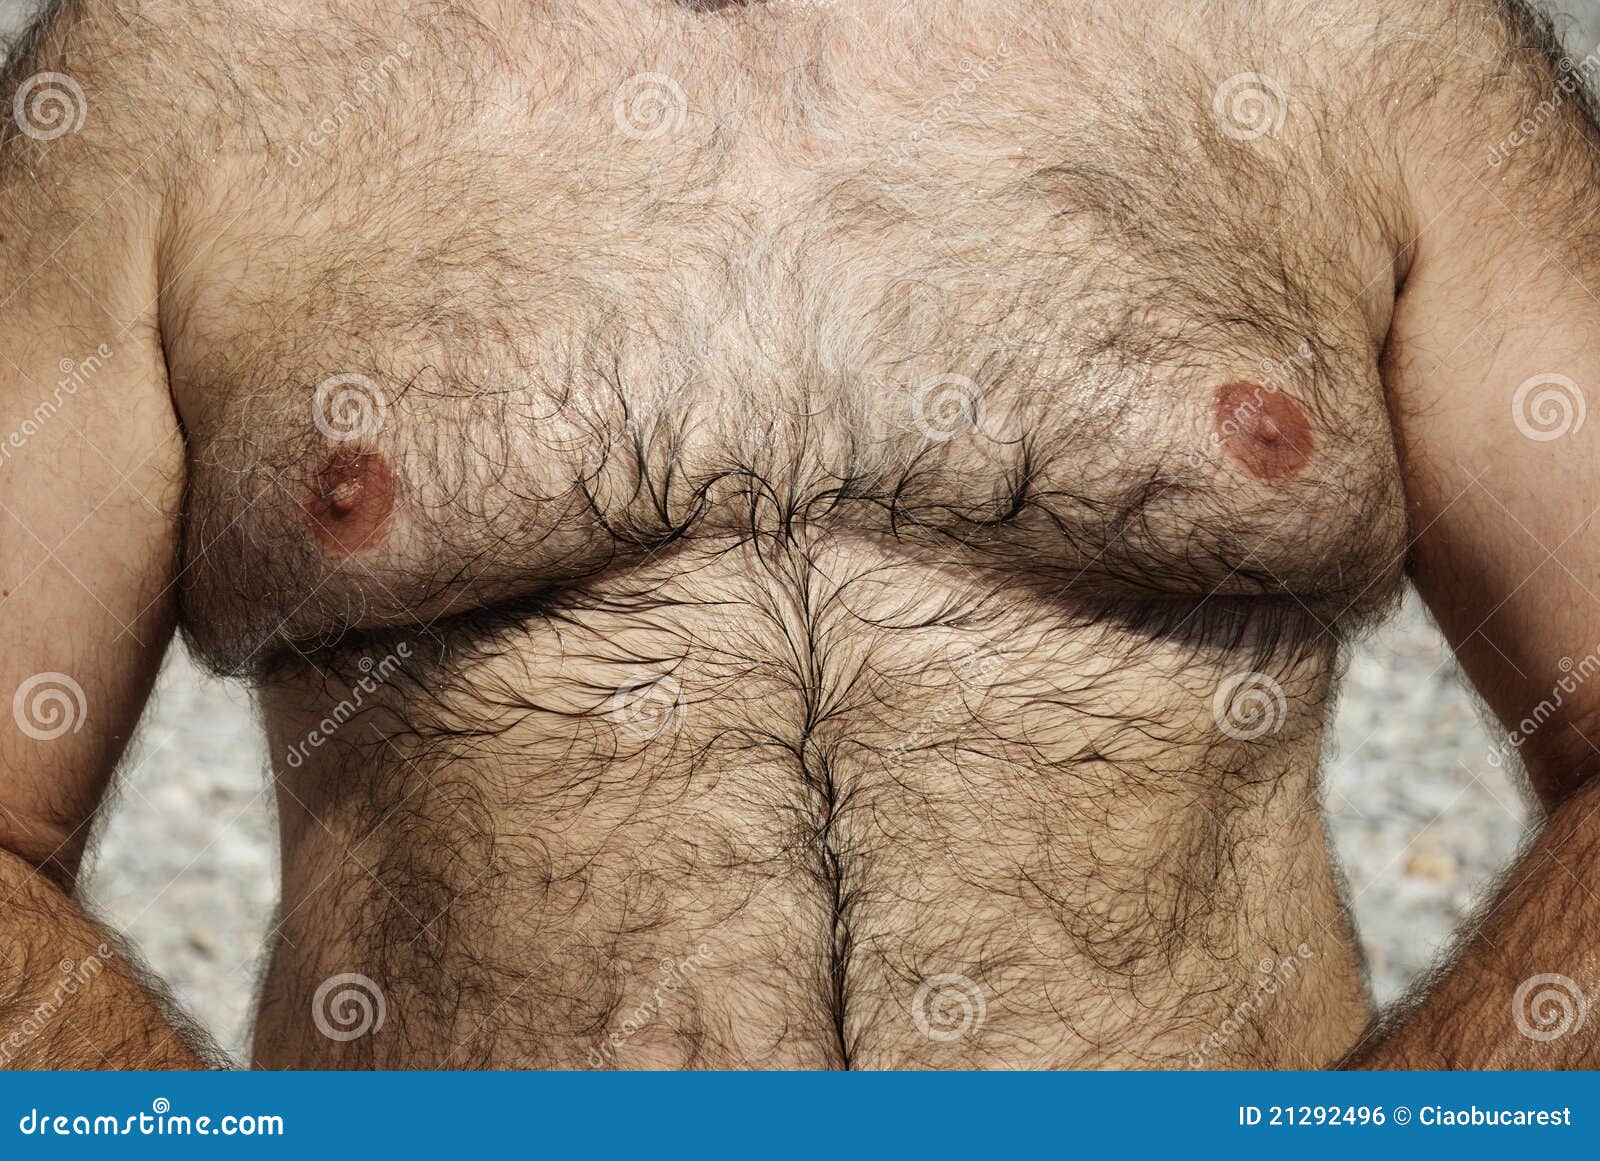 chiran aryal recommends big hairy man boobs pic